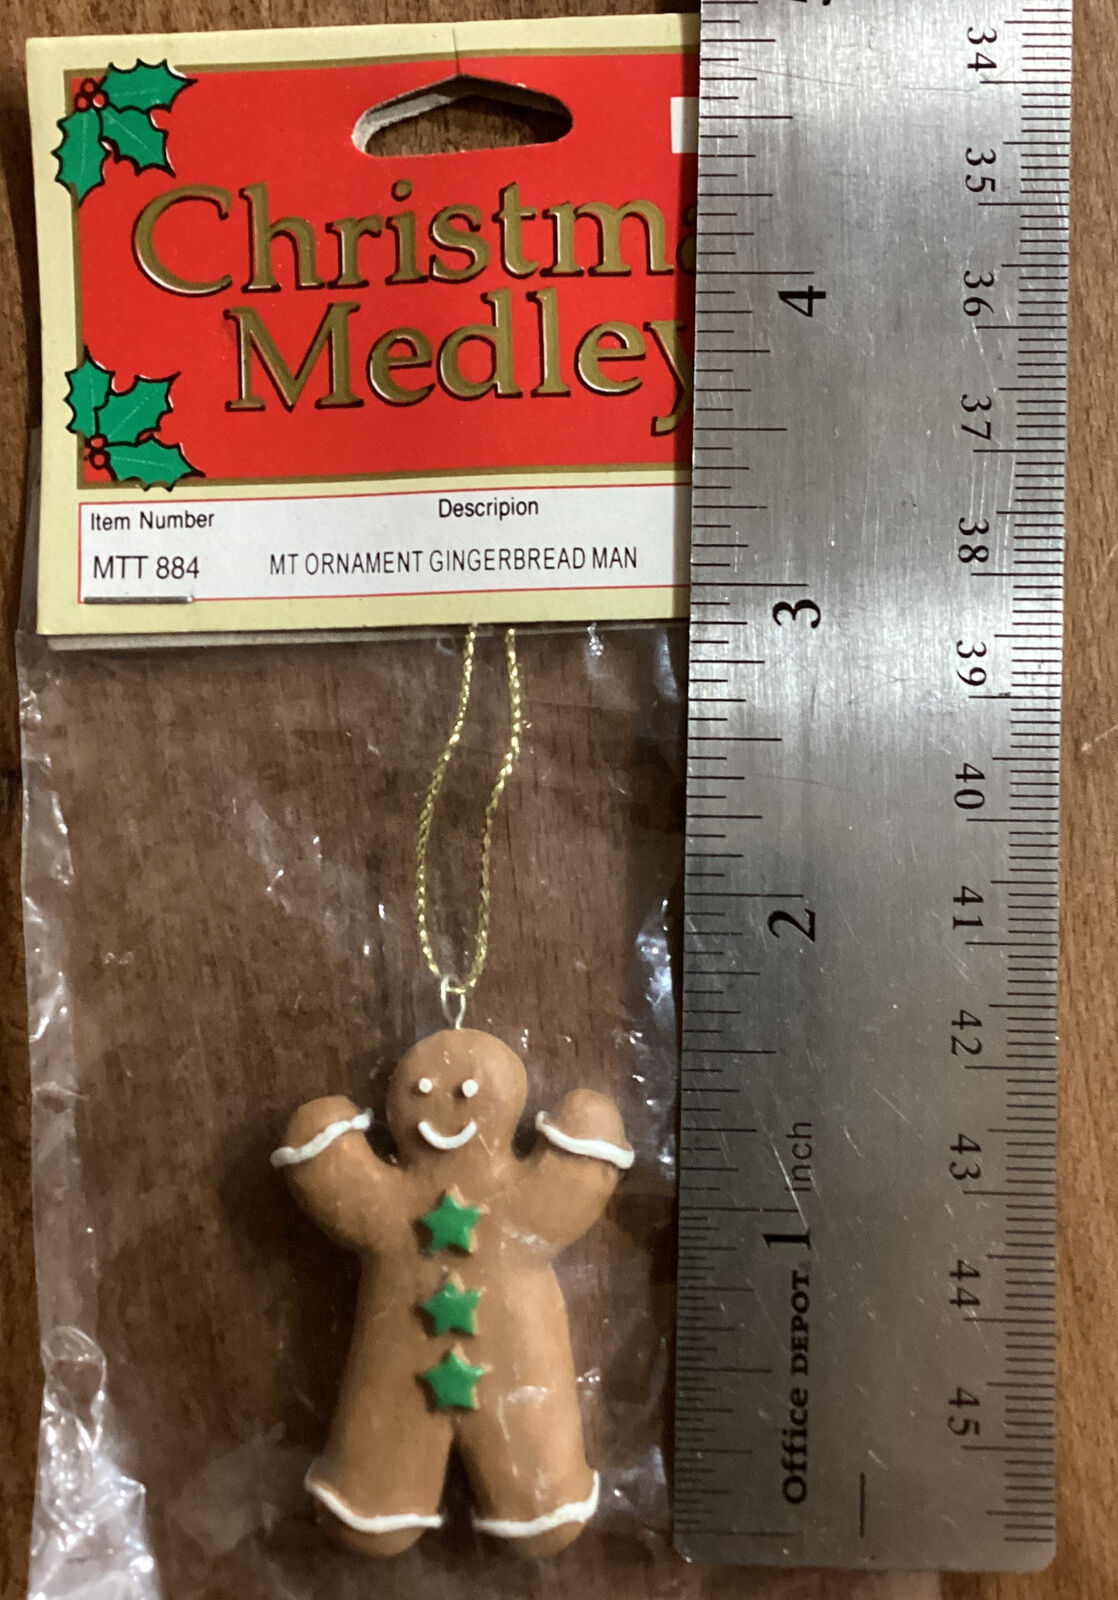 Vintage Small Gingerbread Figure Ornament Christmas Medley Figurine